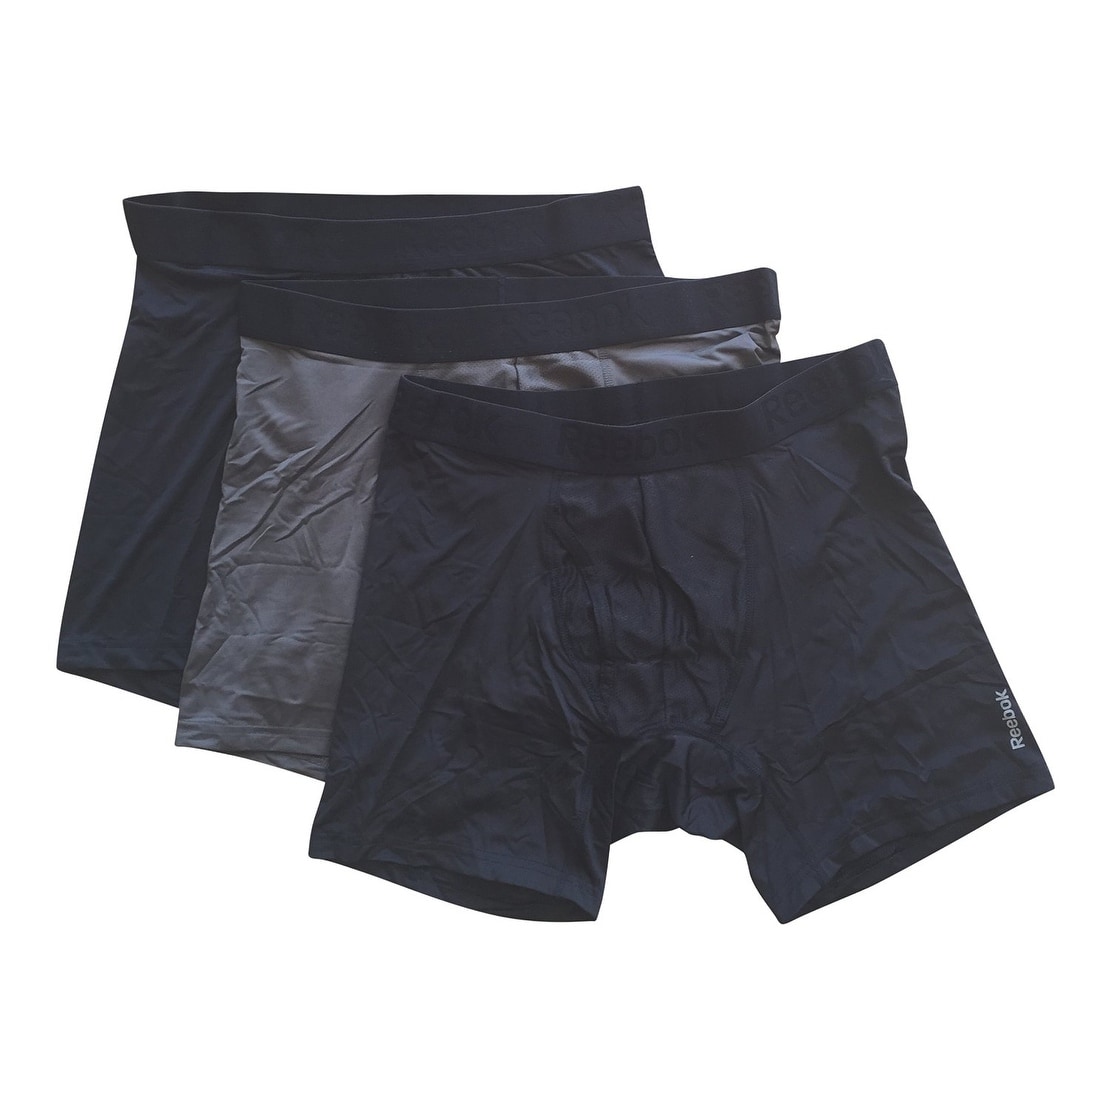 reebok performance underwear 3 pack